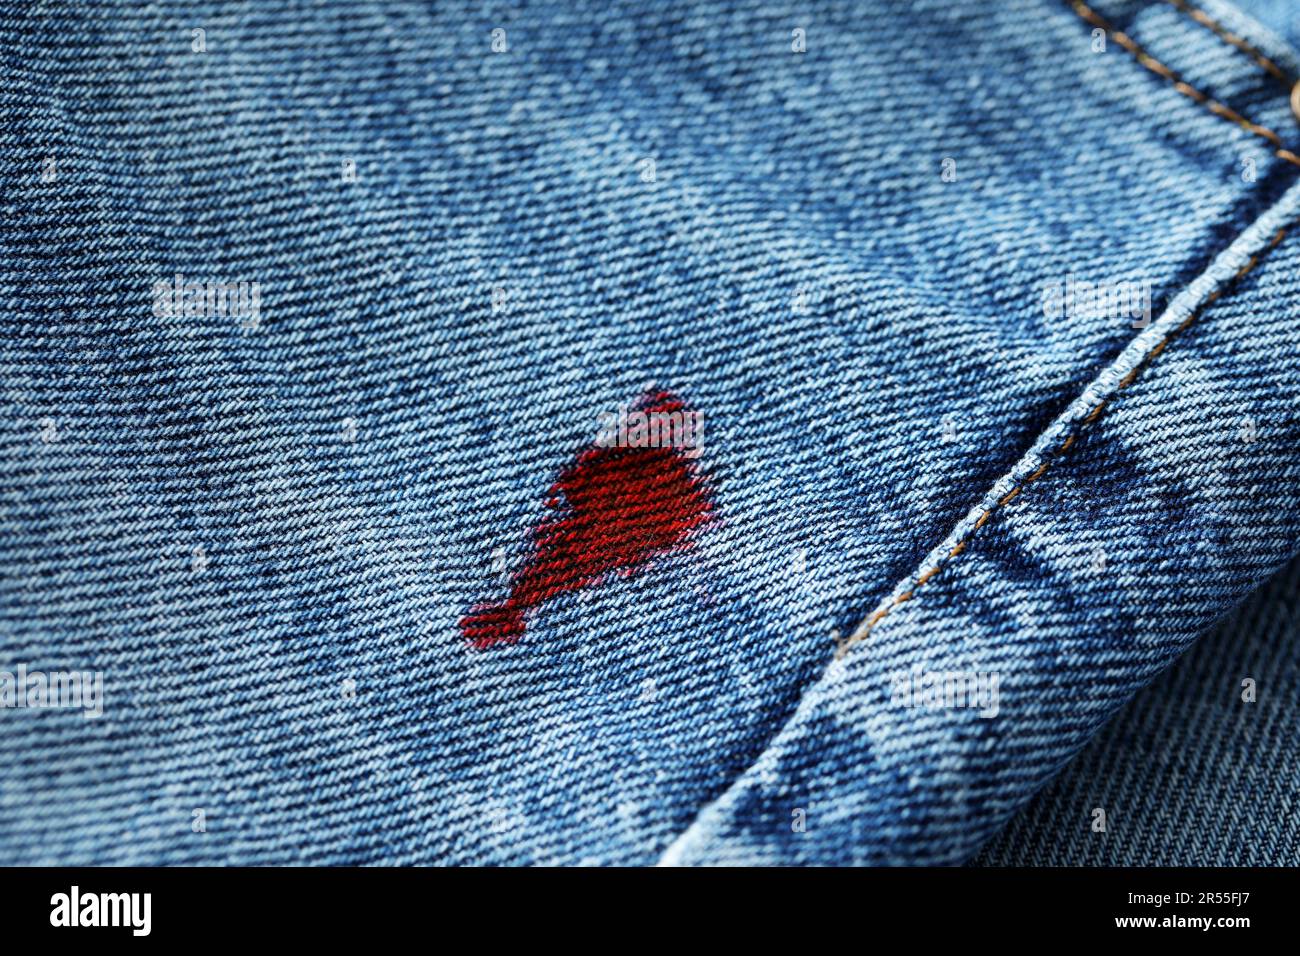 https://c8.alamy.com/comp/2R55FJ7/stain-of-red-ink-on-jeans-closeup-2R55FJ7.jpg